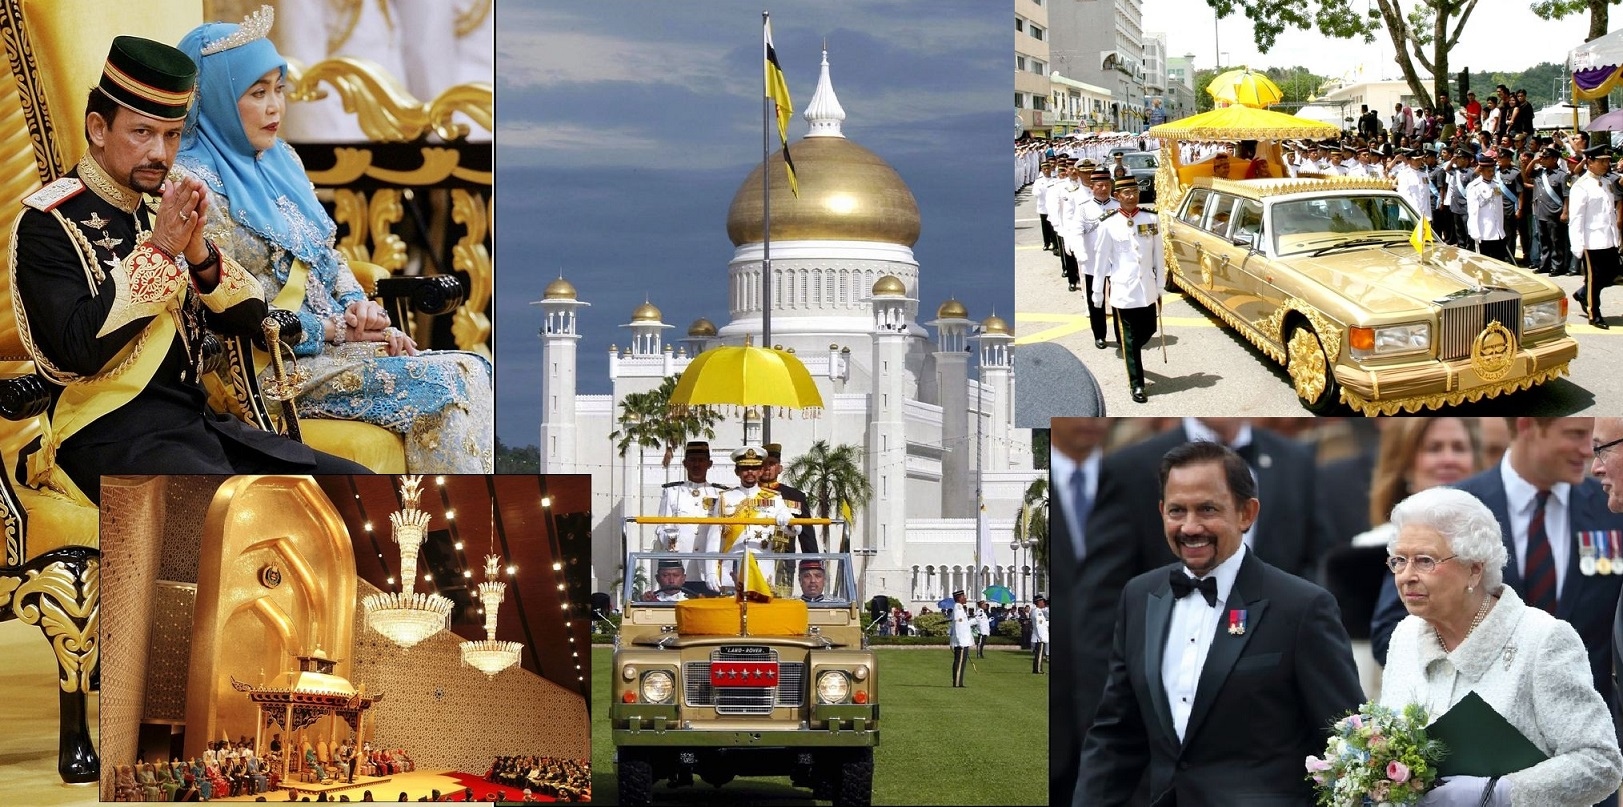 Sultan of Brunei lavish lifestyle